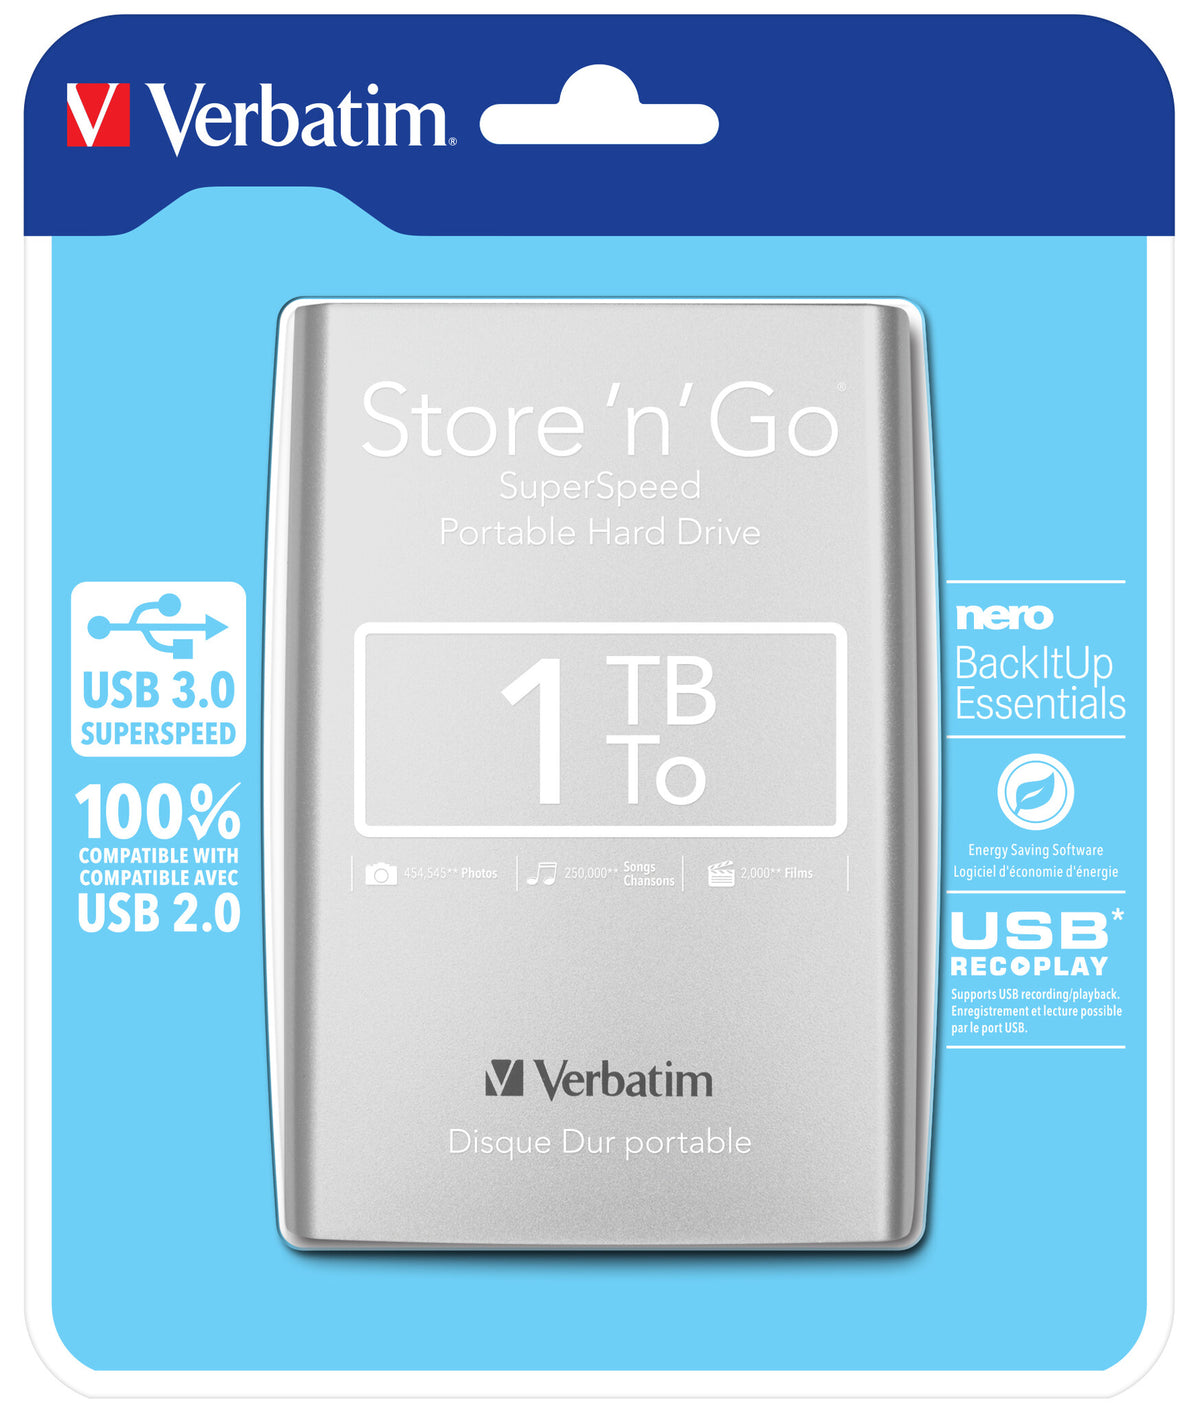 Verbatim Store &#39;n&#39; Go USB 3.0 Portable Hard Drive in Silver - 1 TB